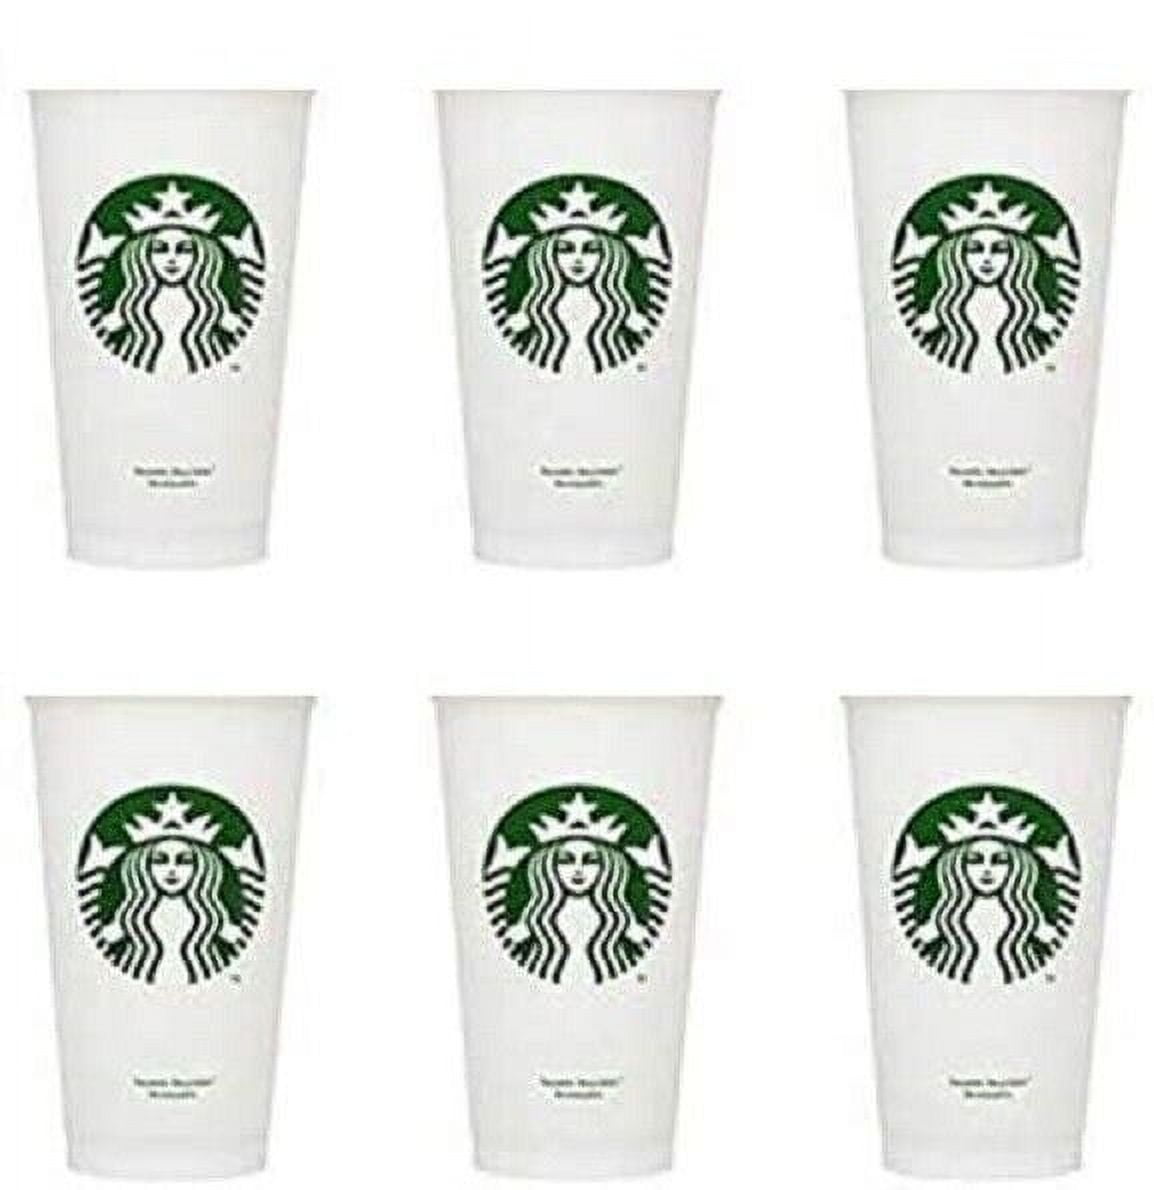 Starbucks White Reusable Travel Mug/Cup/Tumbler Grande Medium, 16oz 473ml